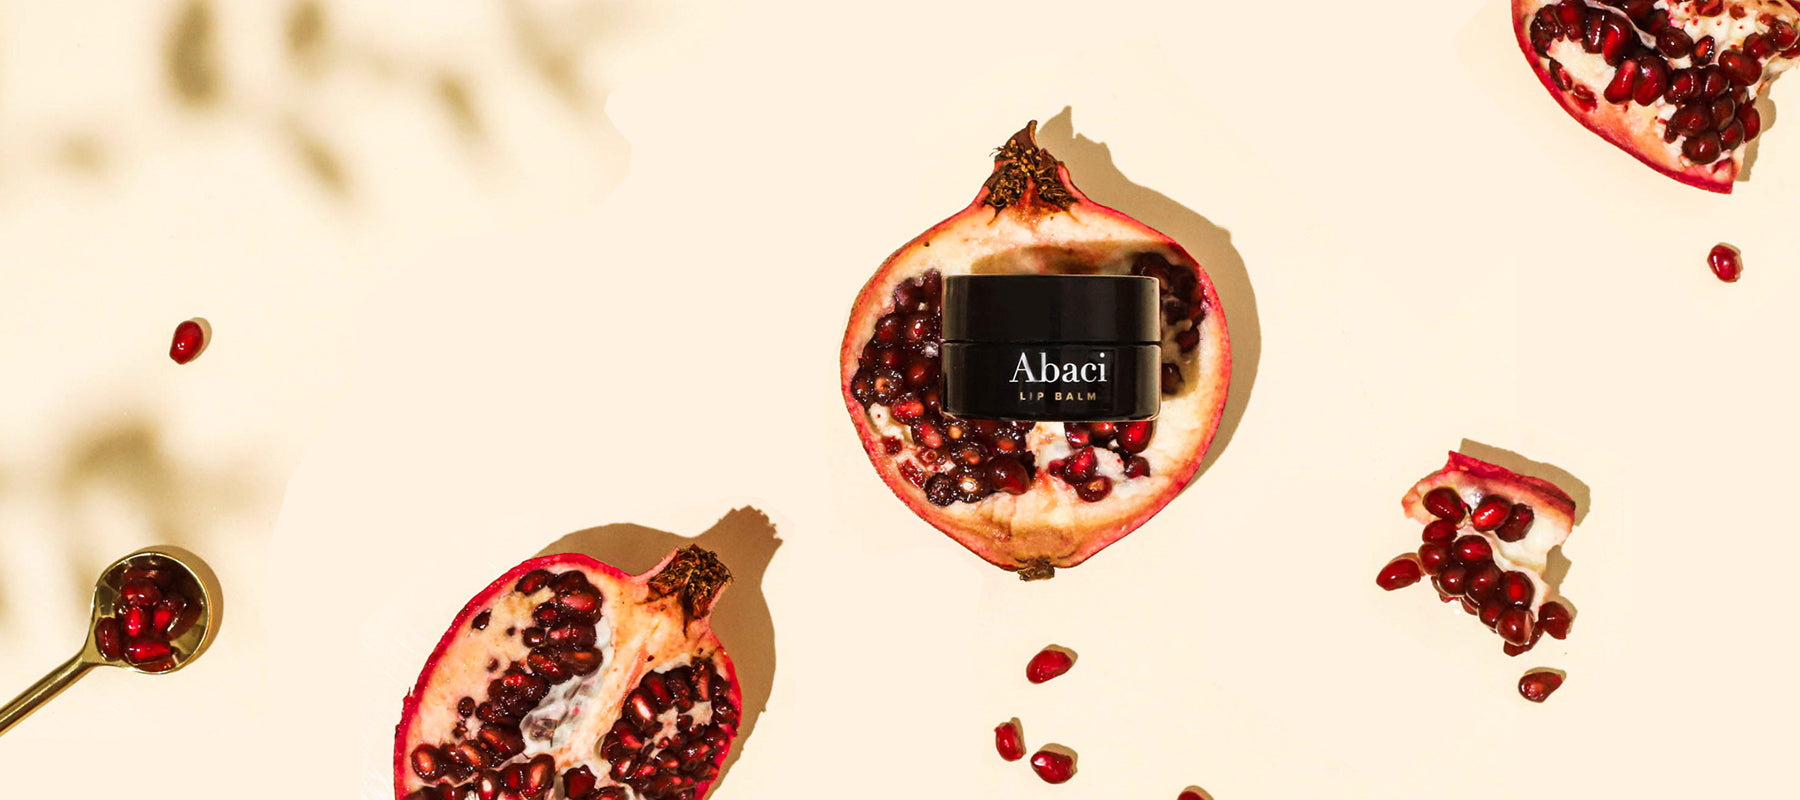 Abaci Organic Lip Balm featured among pomegranates and pomegranate seeds.